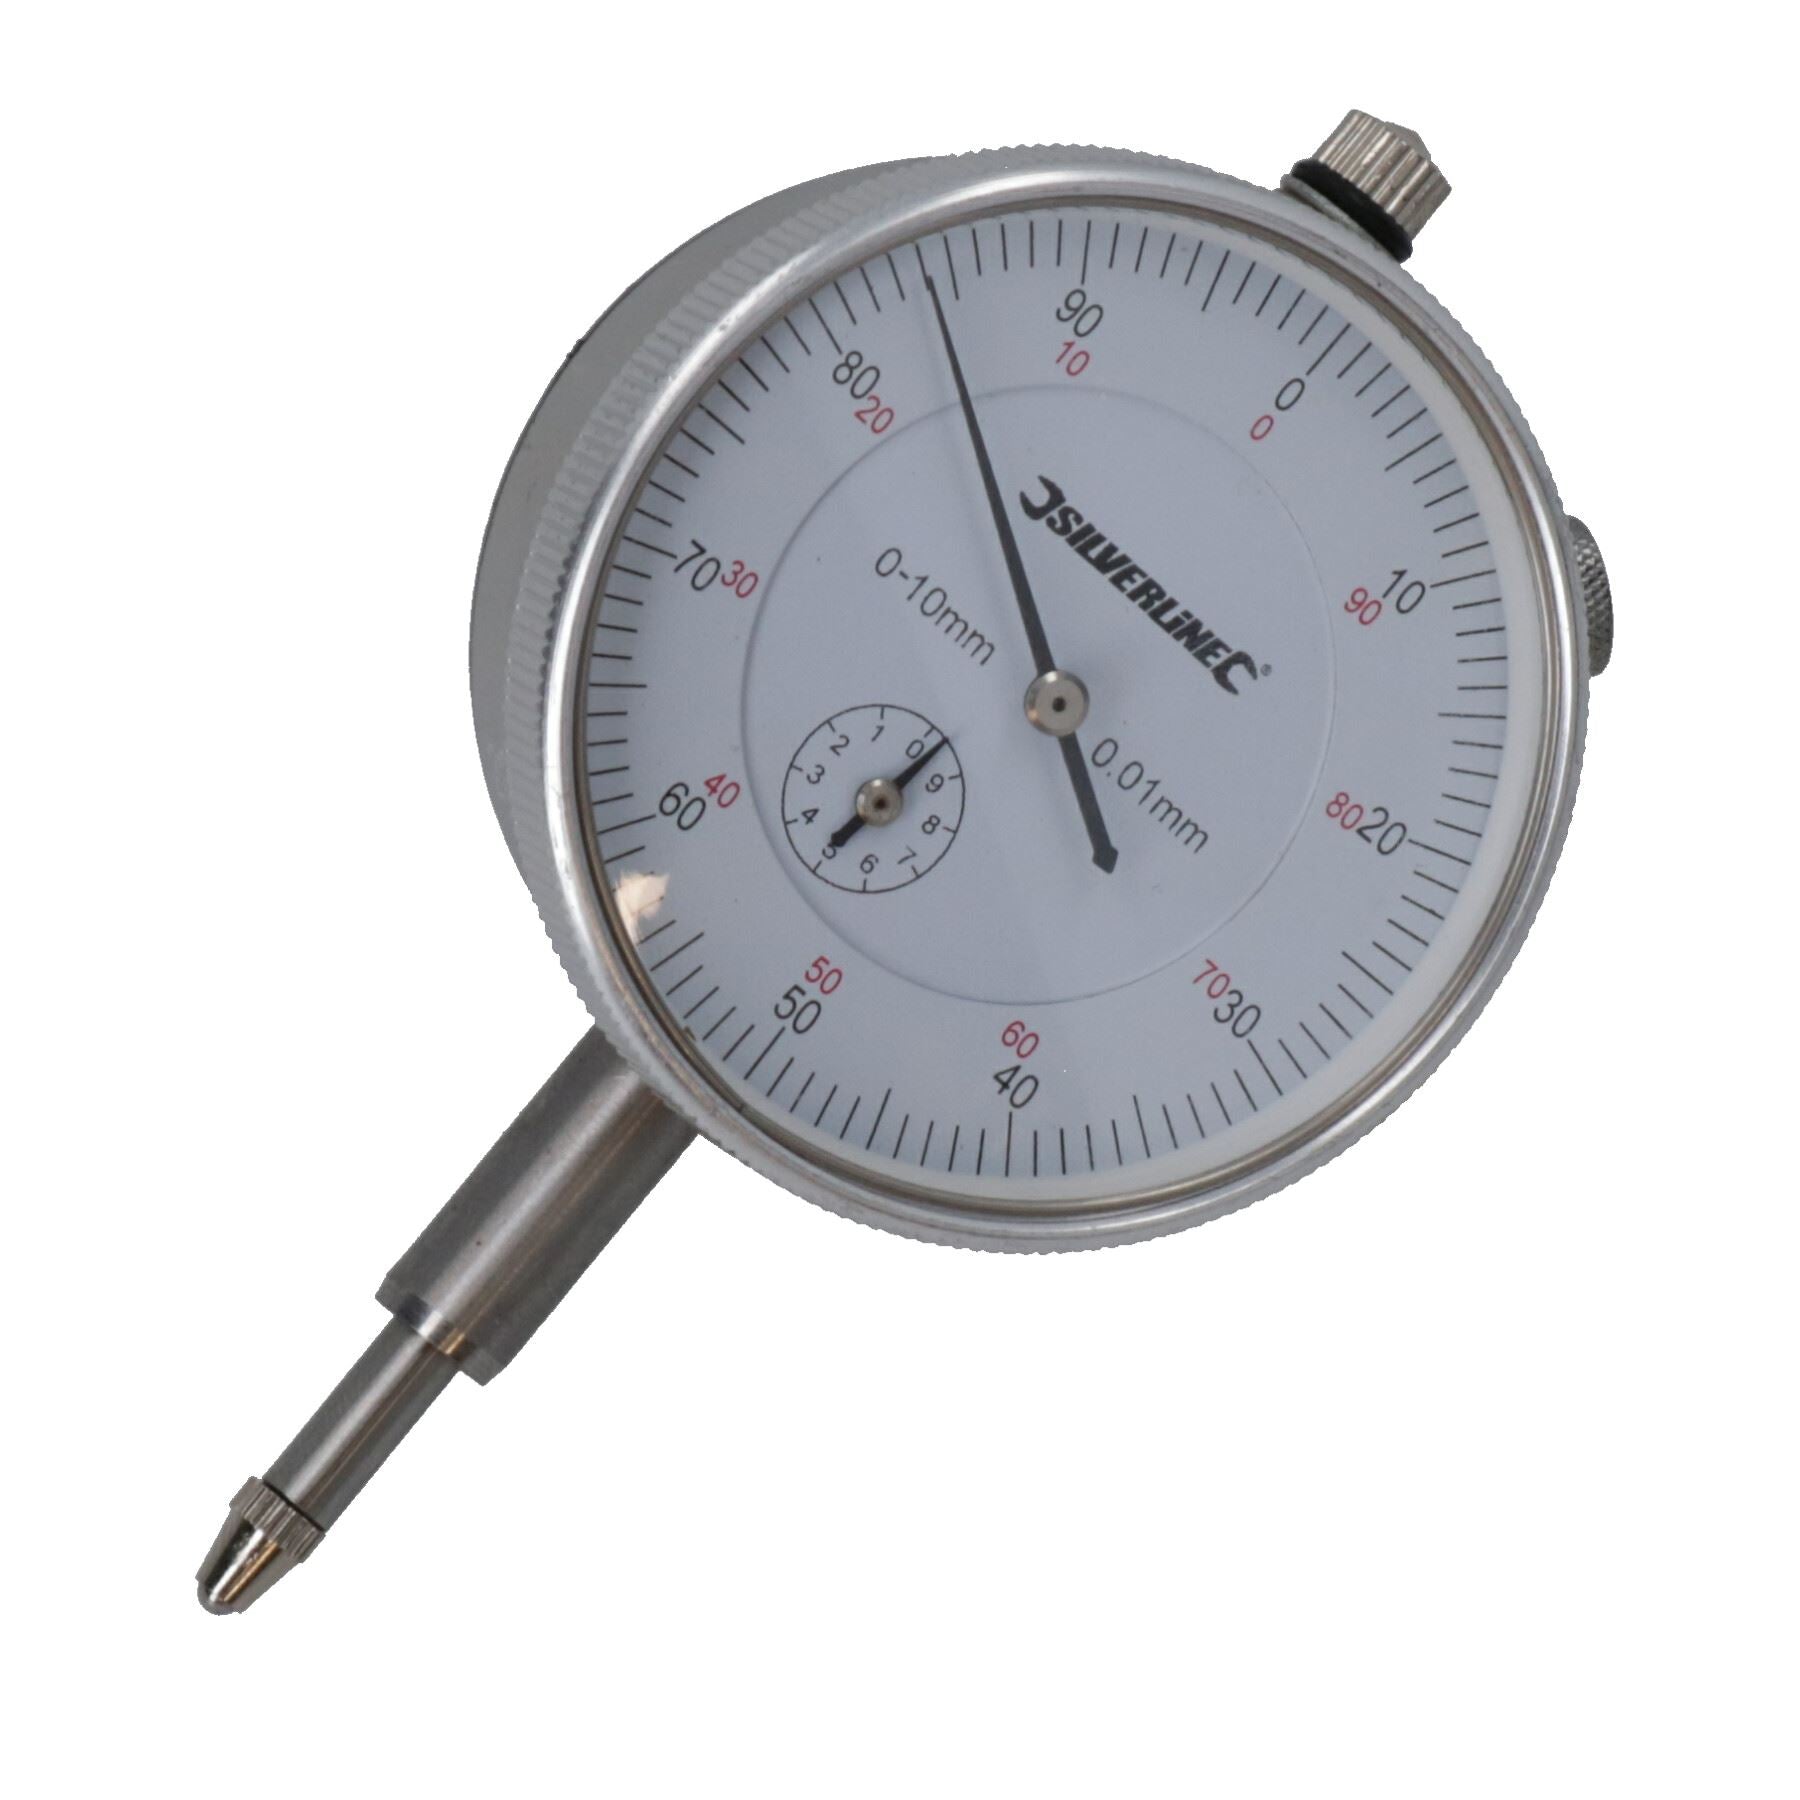 Dial Test Indicator / DTI Gauge / Clock Gauge TDC Sil158